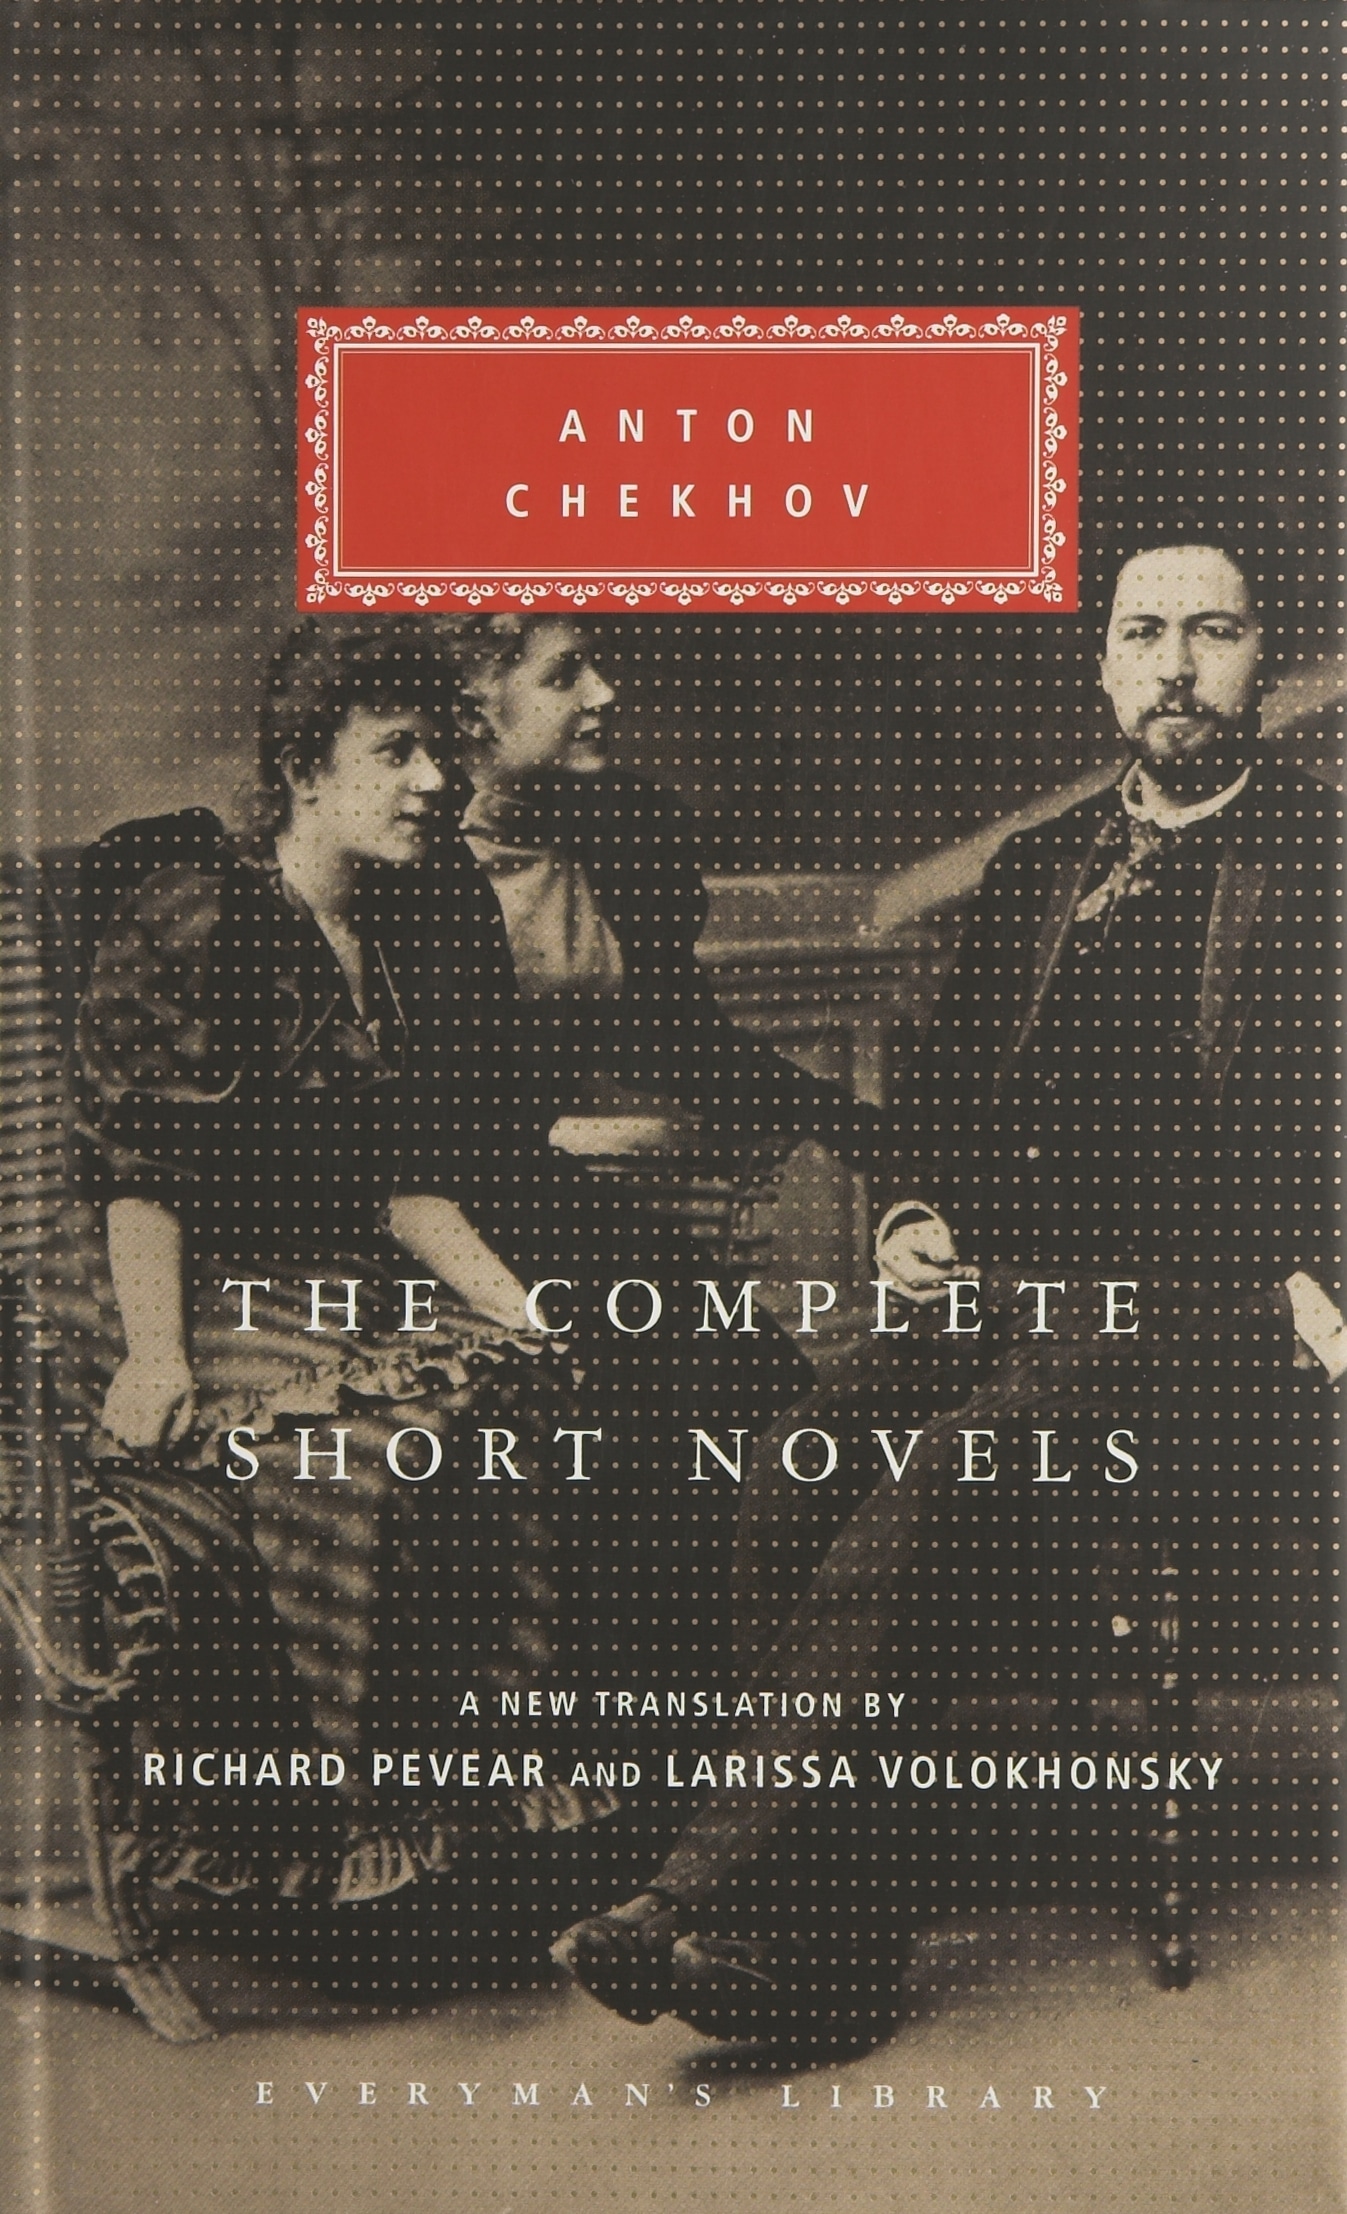 Short novel. Richard Pevear and Larissa Volokhonsky.